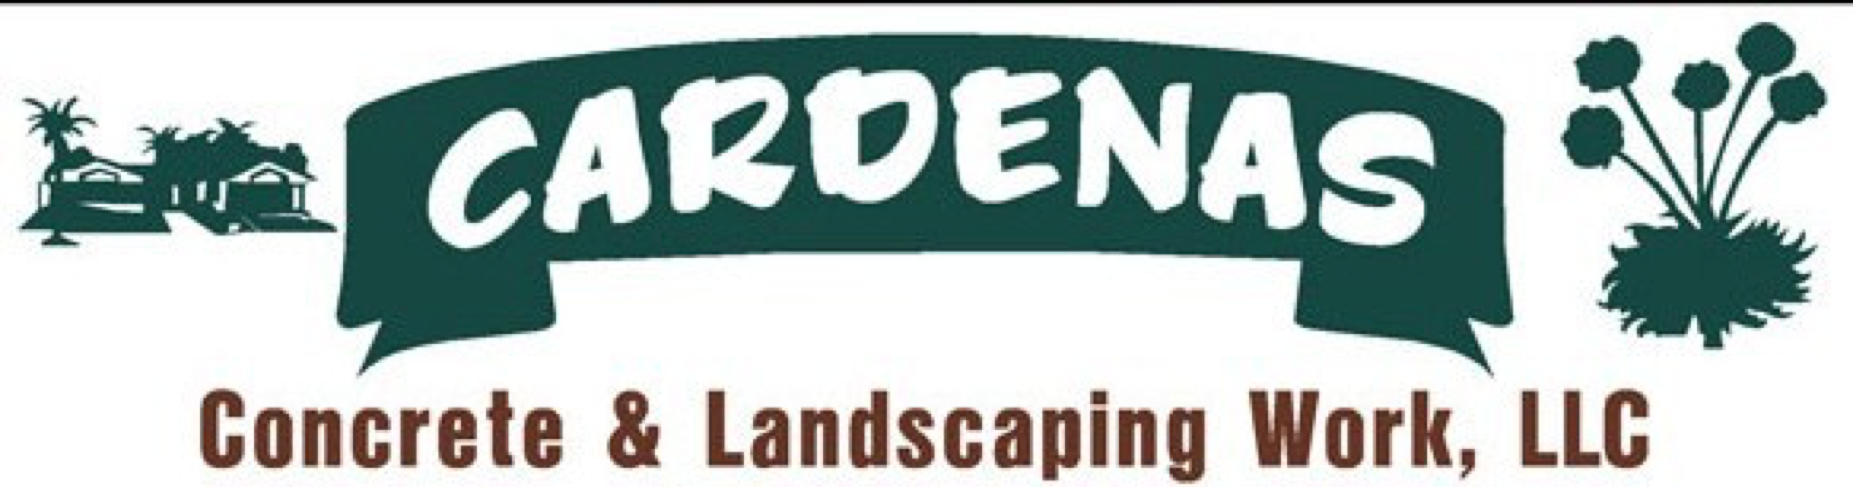 Cardenas Concrete & Landscaping Works, LLC Logo